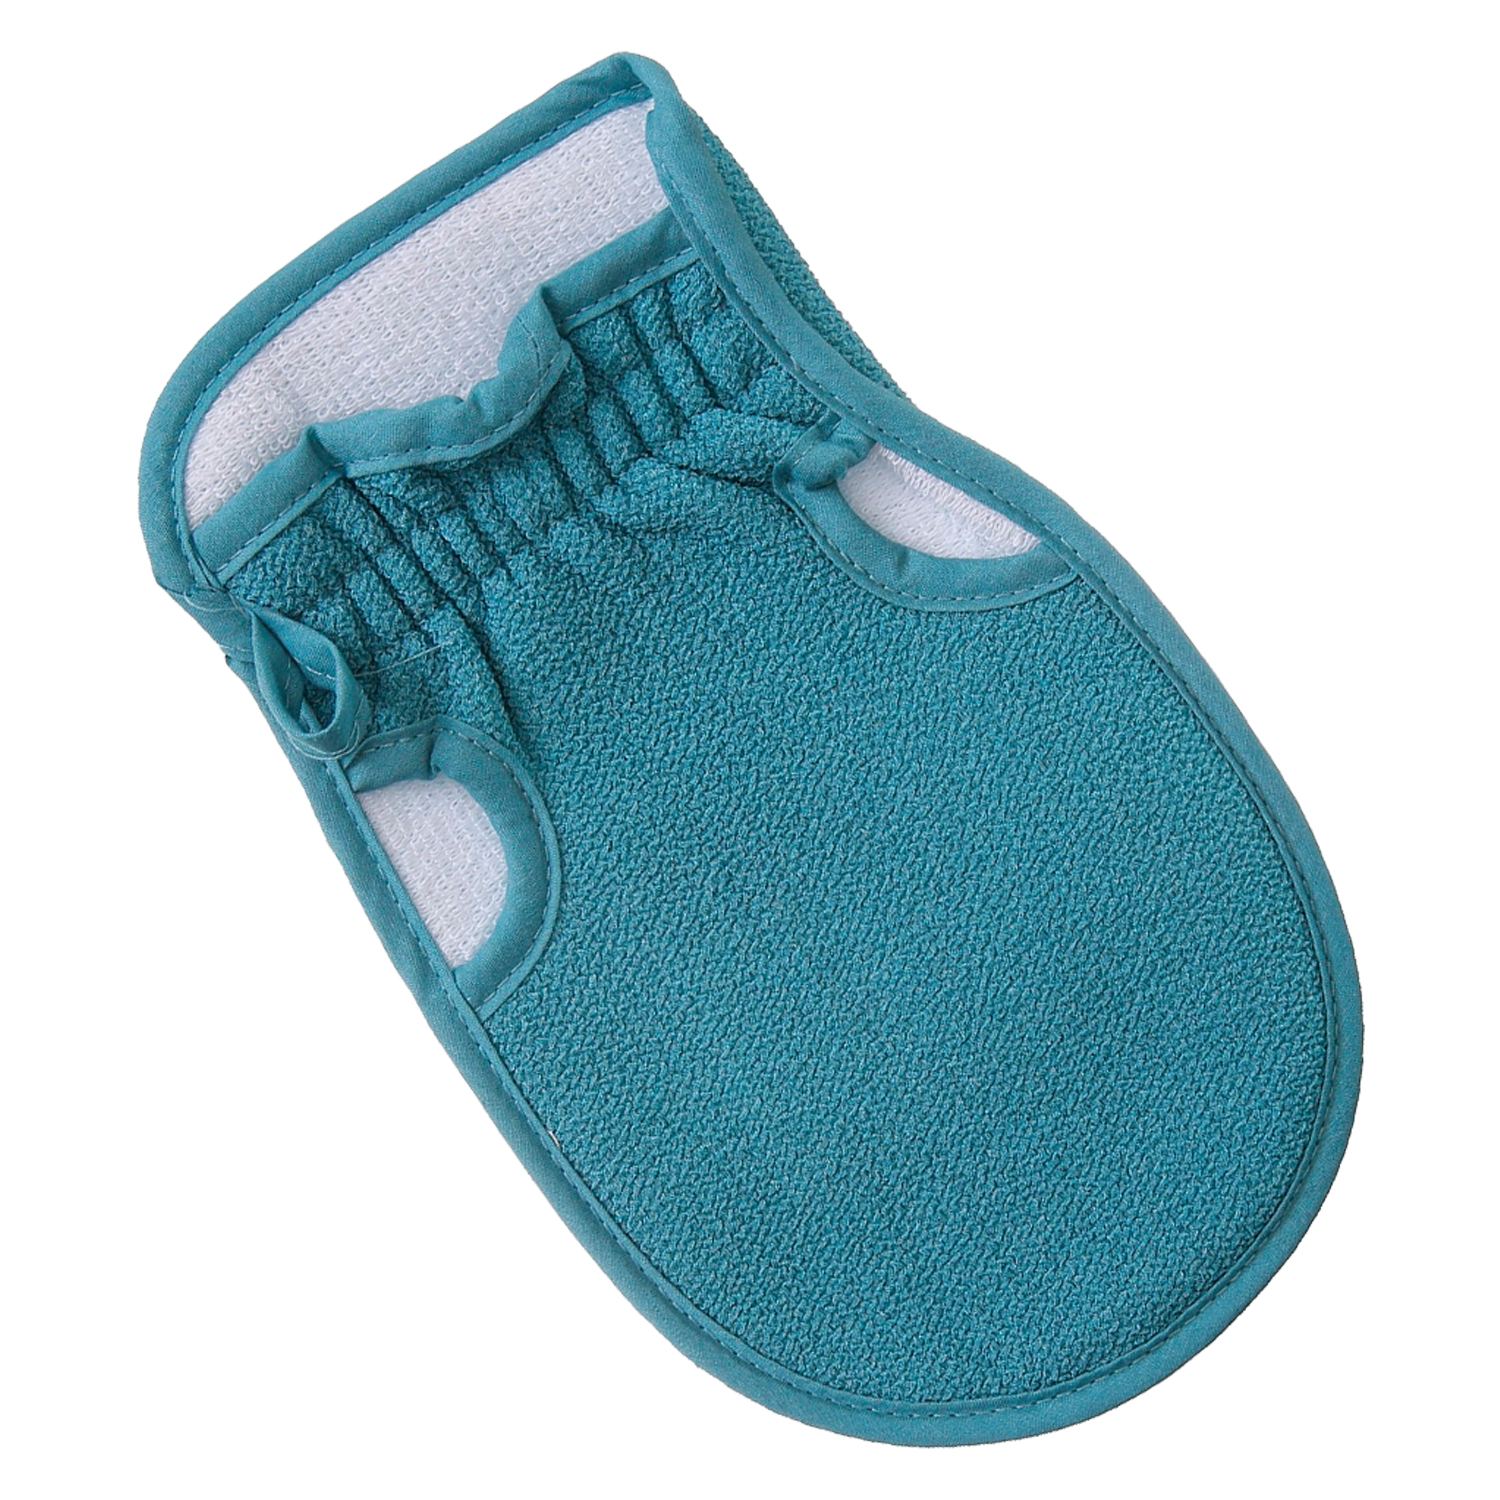 Мочалка-рукавица, VenusShape, цвет серо-голубой, 23х14 см мочалка рукавица venusshape песочный 23х14 см